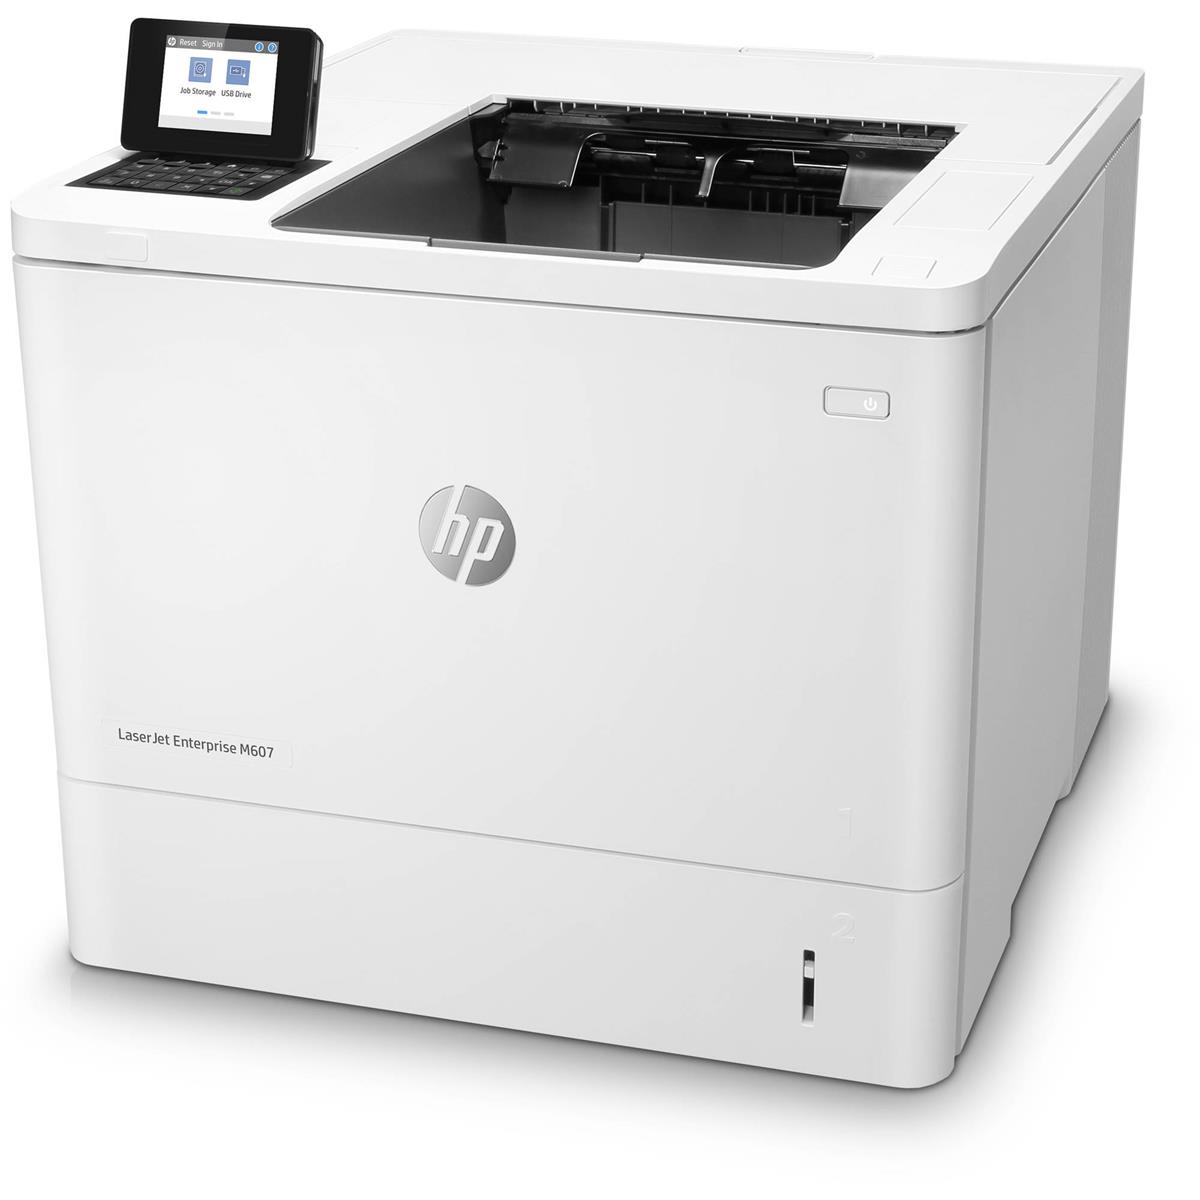 Image of HP LaserJet Enterprise M607n Monochrome Laser Printer